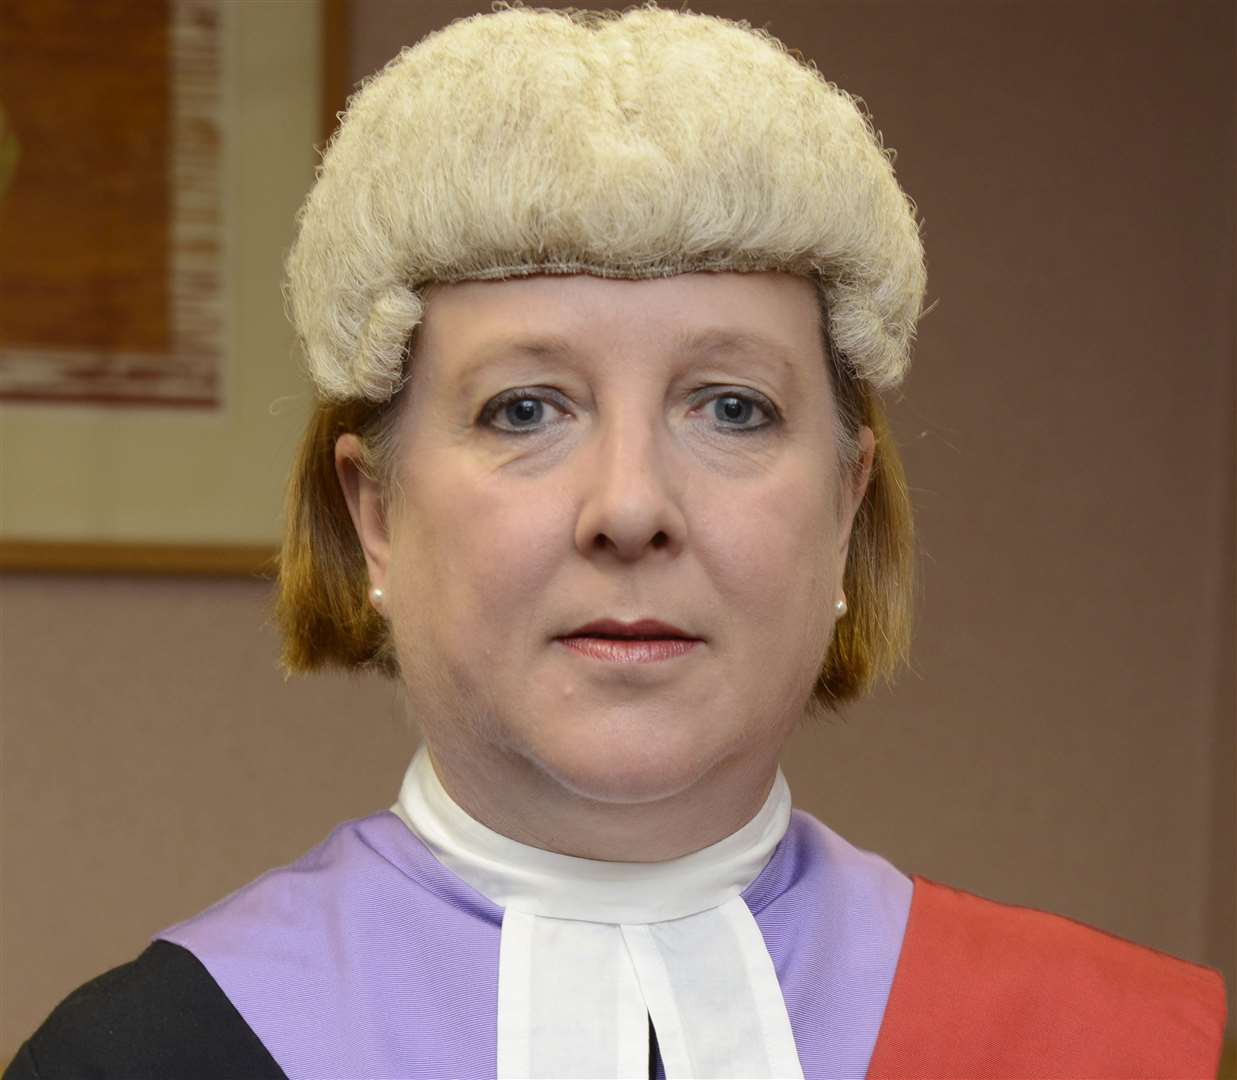 Judge Catherine Brown